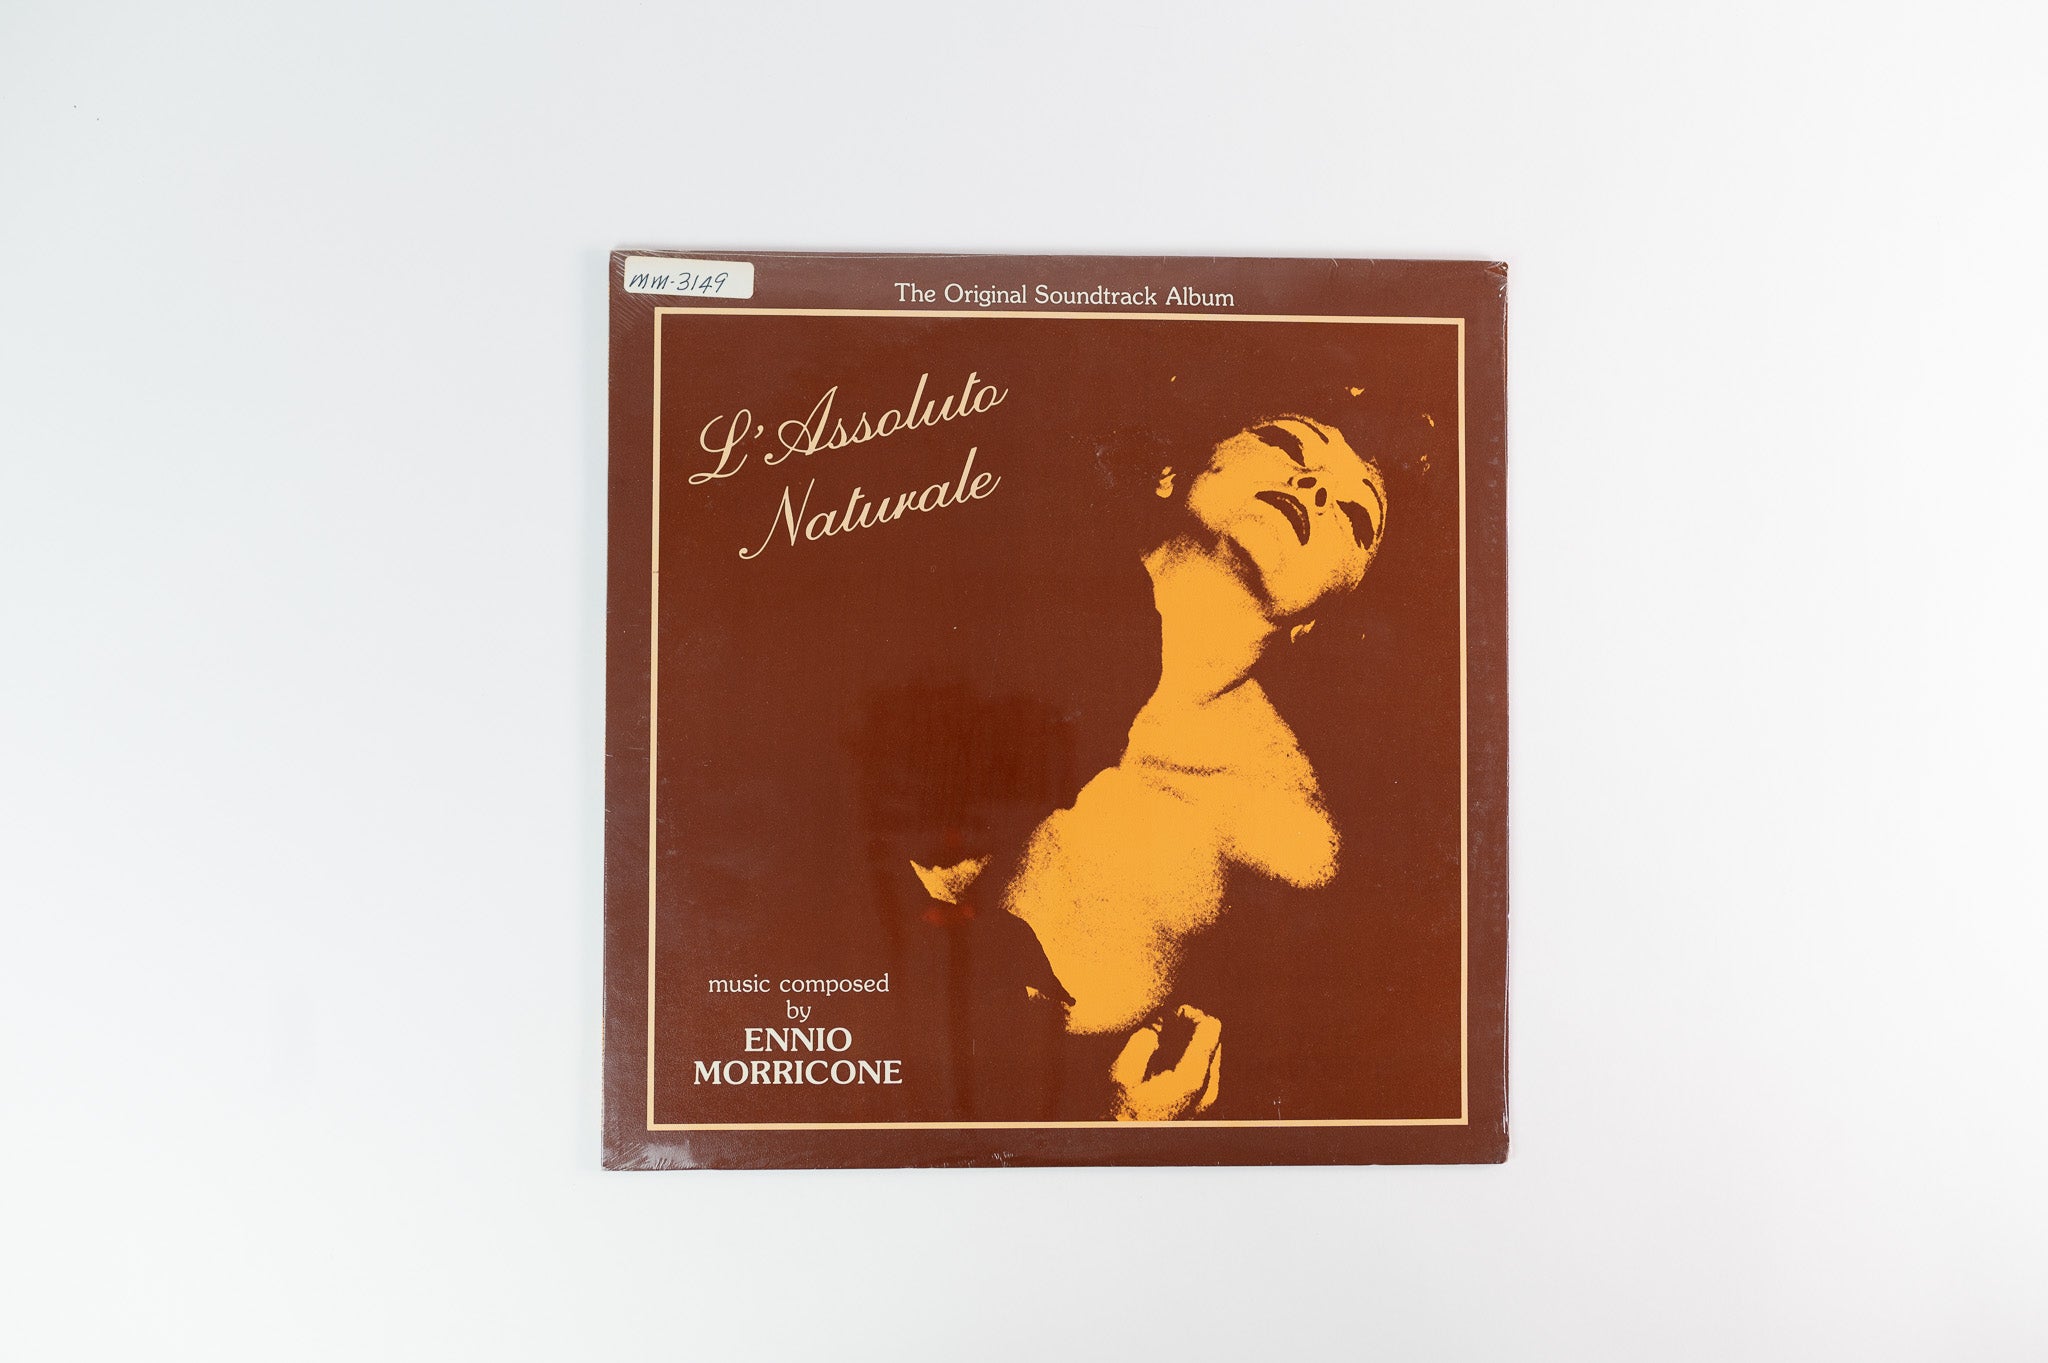 Ennio Morricone - L' Assoluto Naturale (The Original Soundtrack Album) on Cerberus Sealed